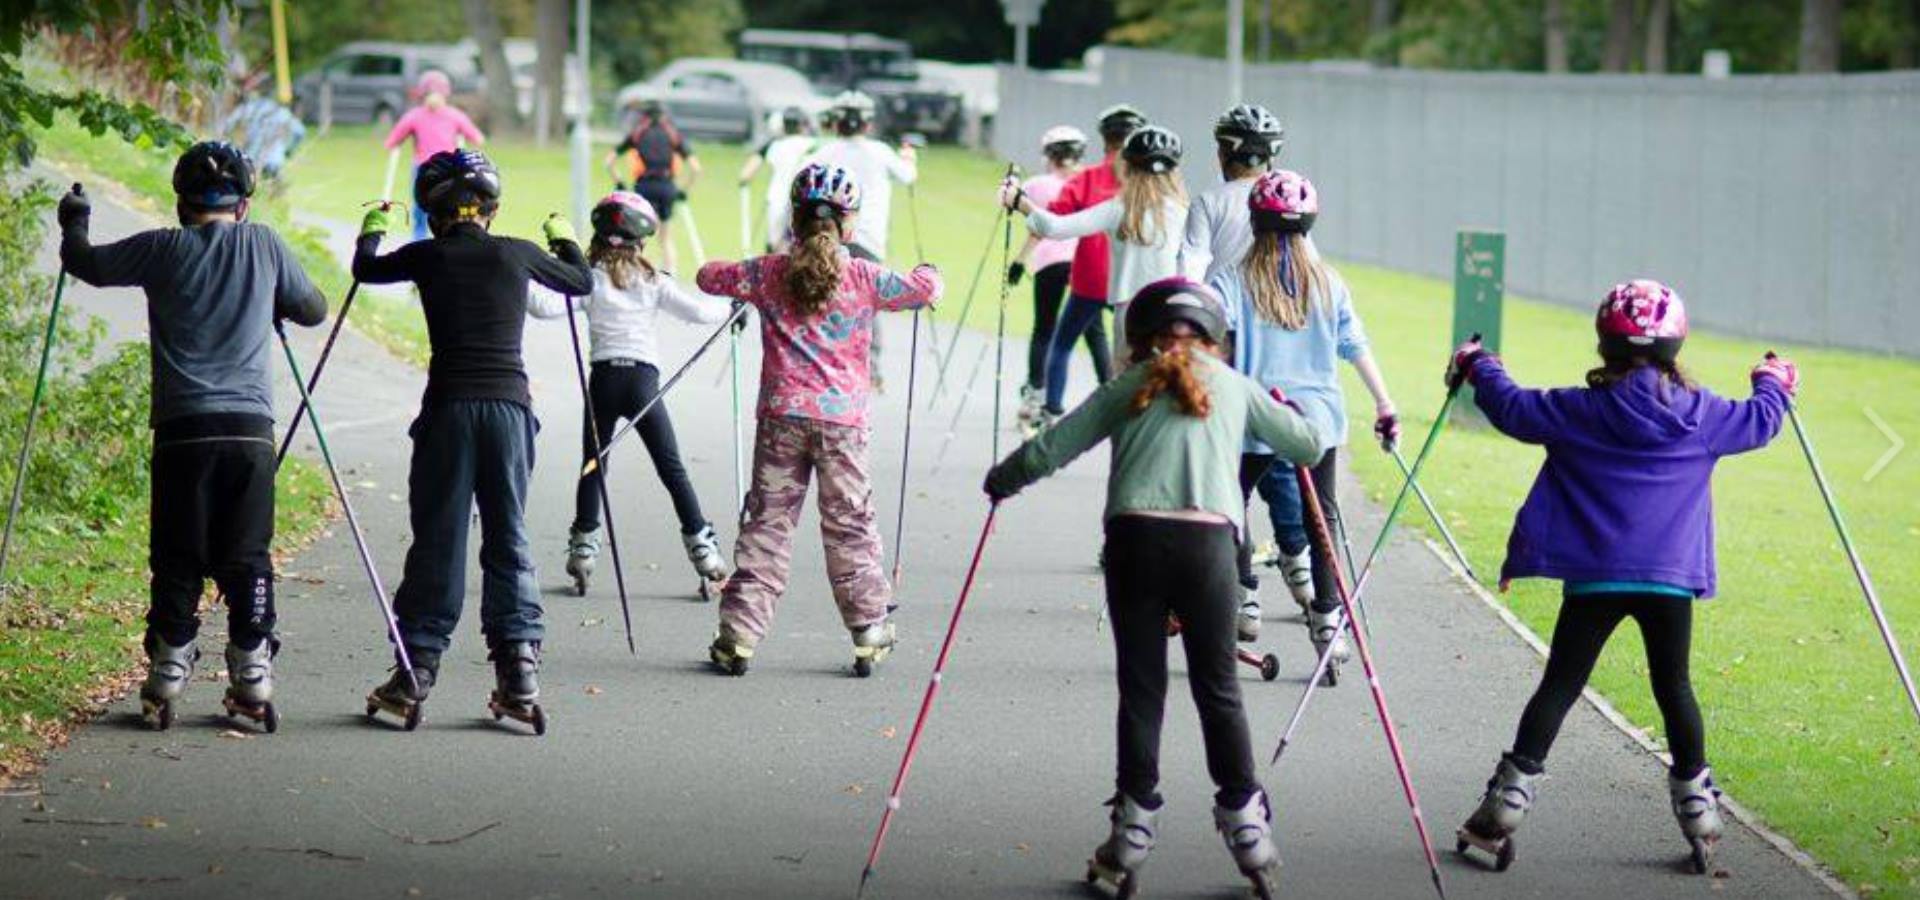 A group of children enjoying a nordic ski lesson